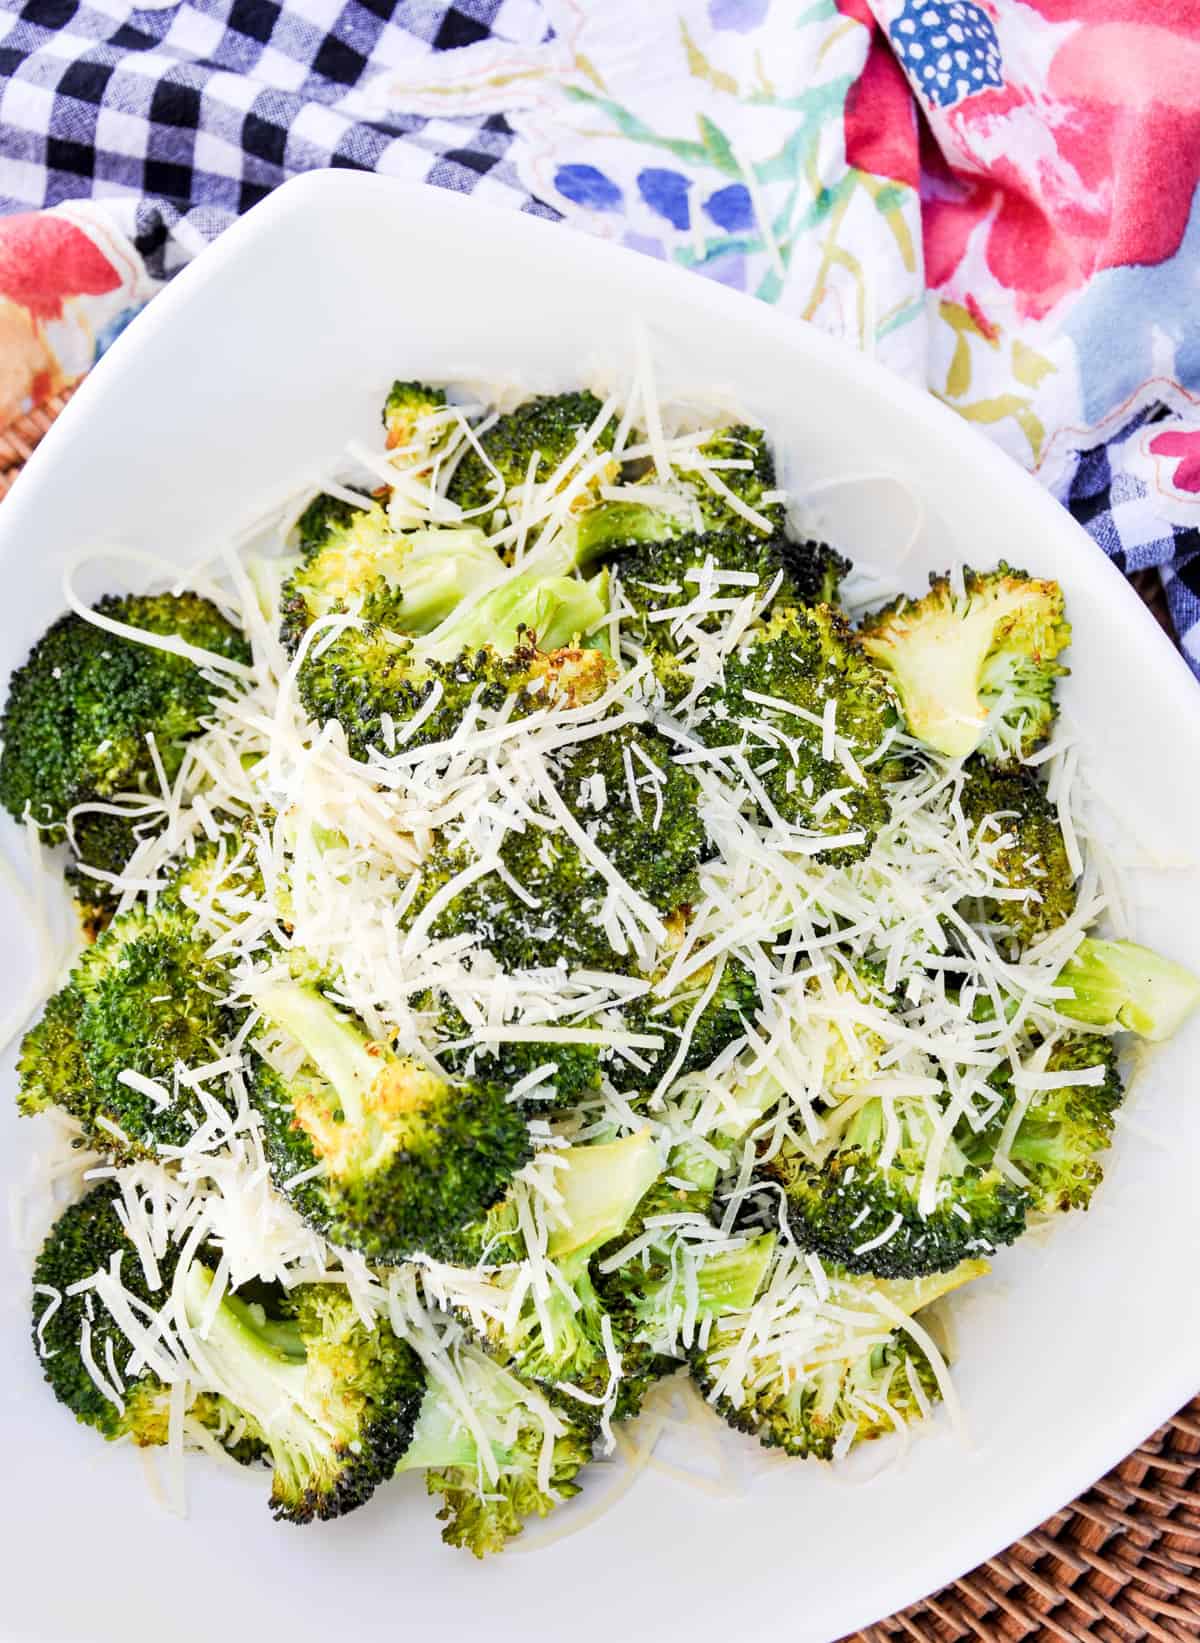 Roasted Garlic Broccoli with Parmesan